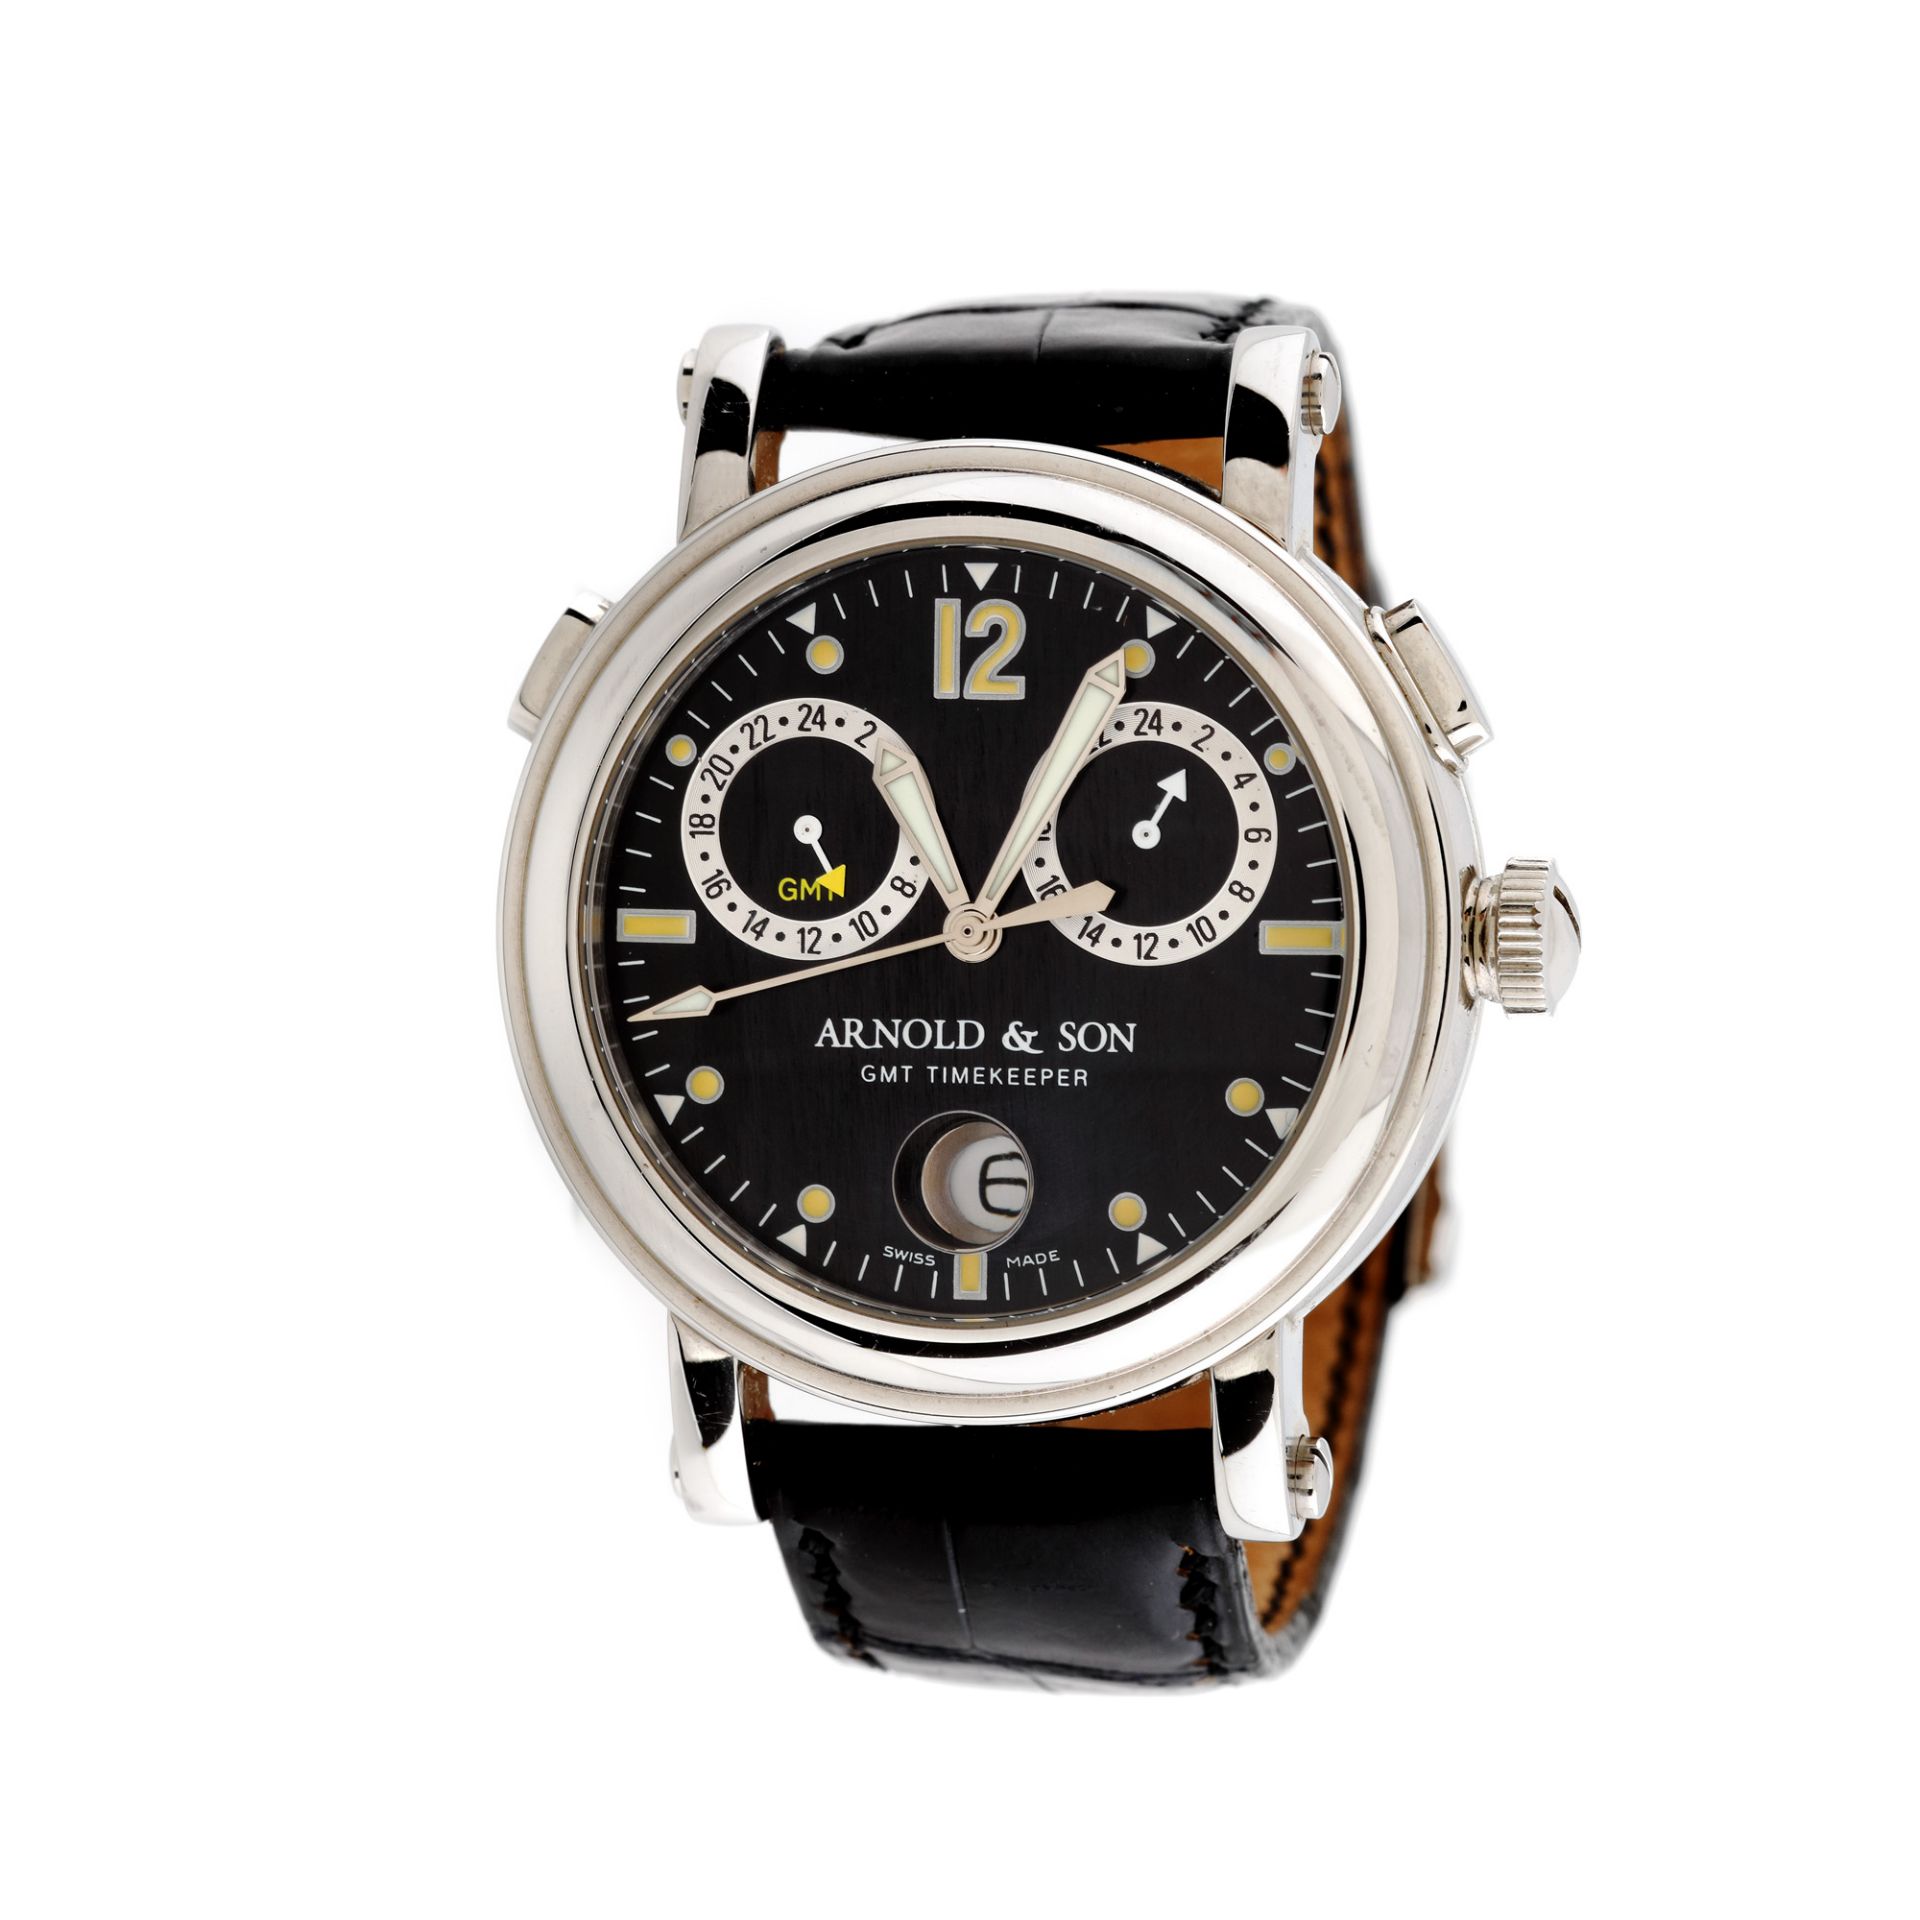 Arnold & Son wristwatch, menArnold & Son GMT Timekeeper wristwatch, men, reference 1g2as.b01a.c